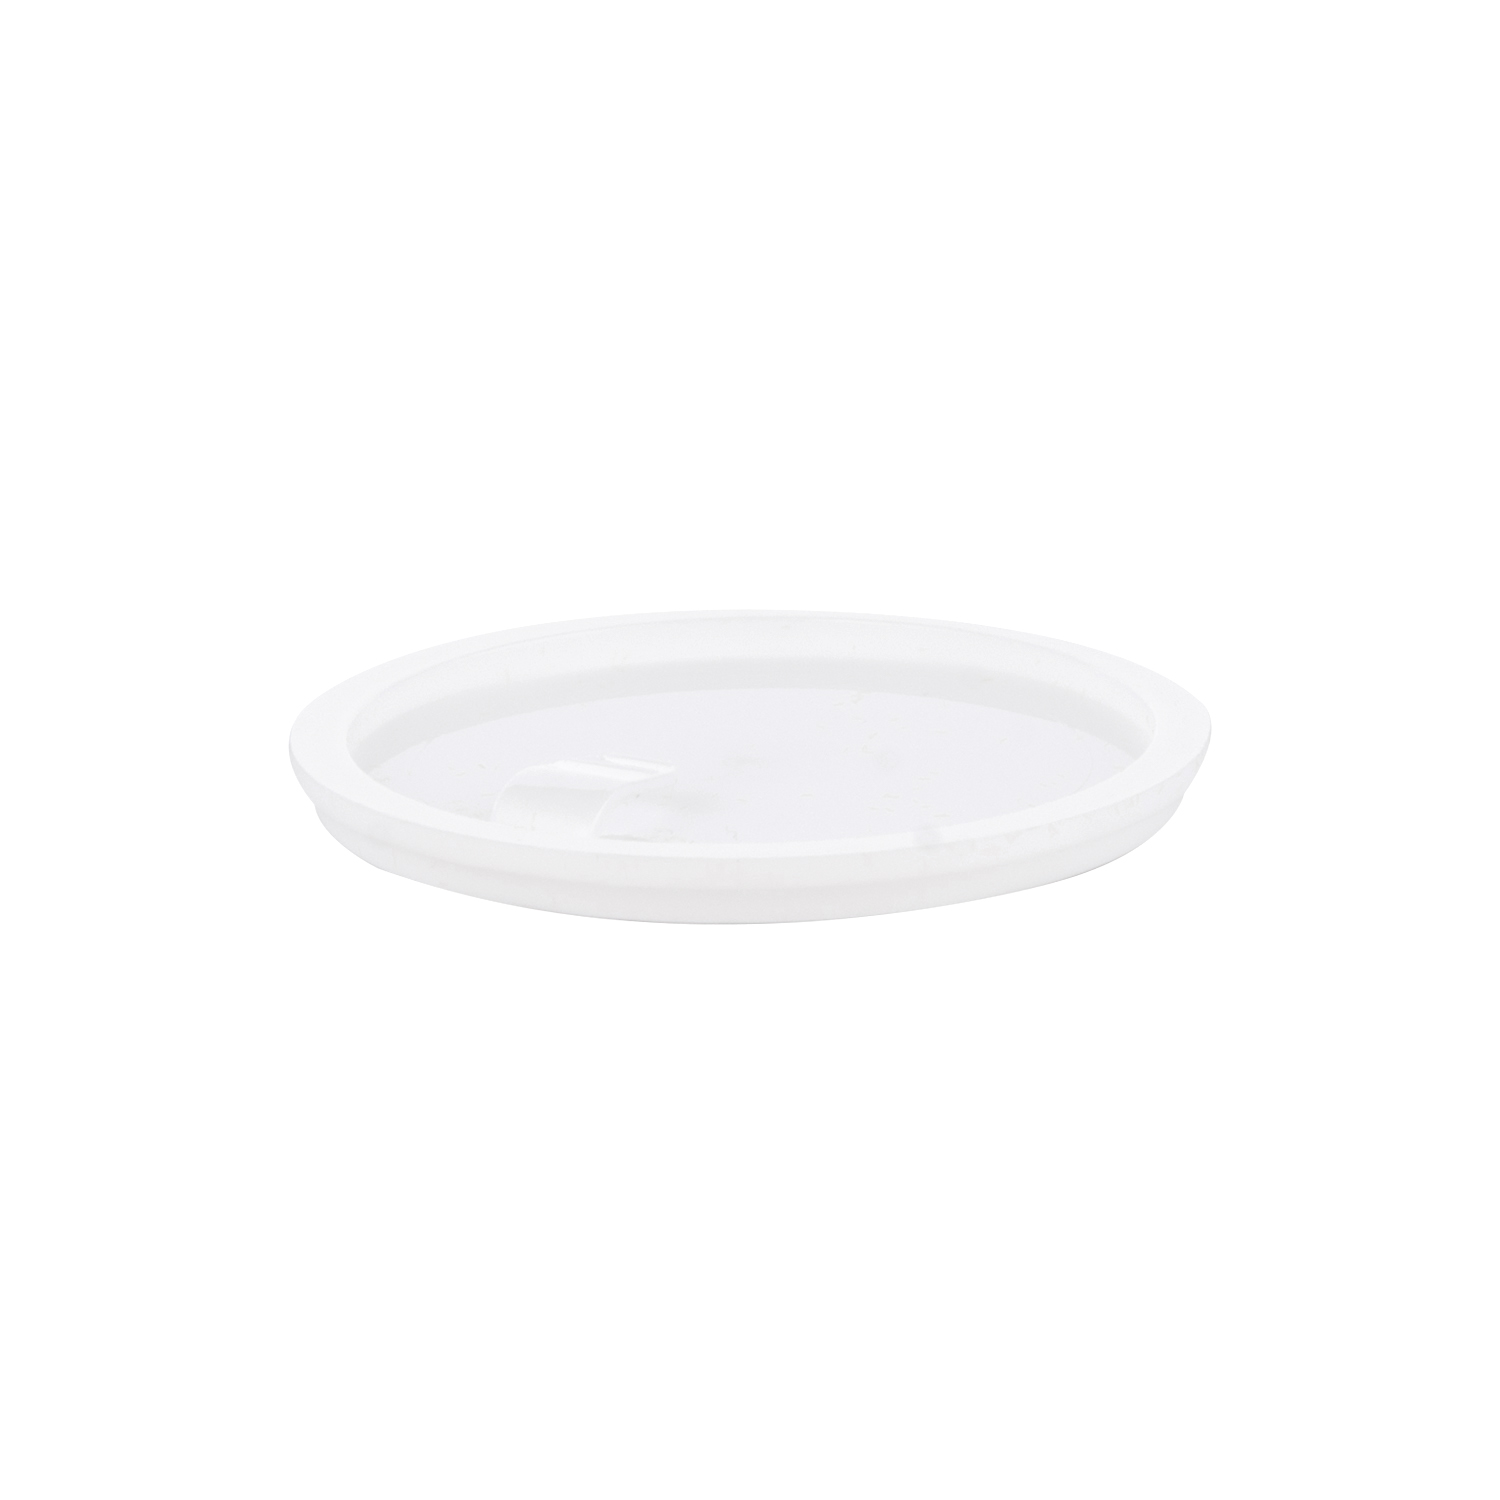 15g 30g 50g 100g Round Flocking Acrylic Cream Jar Velvet Texture Packaging